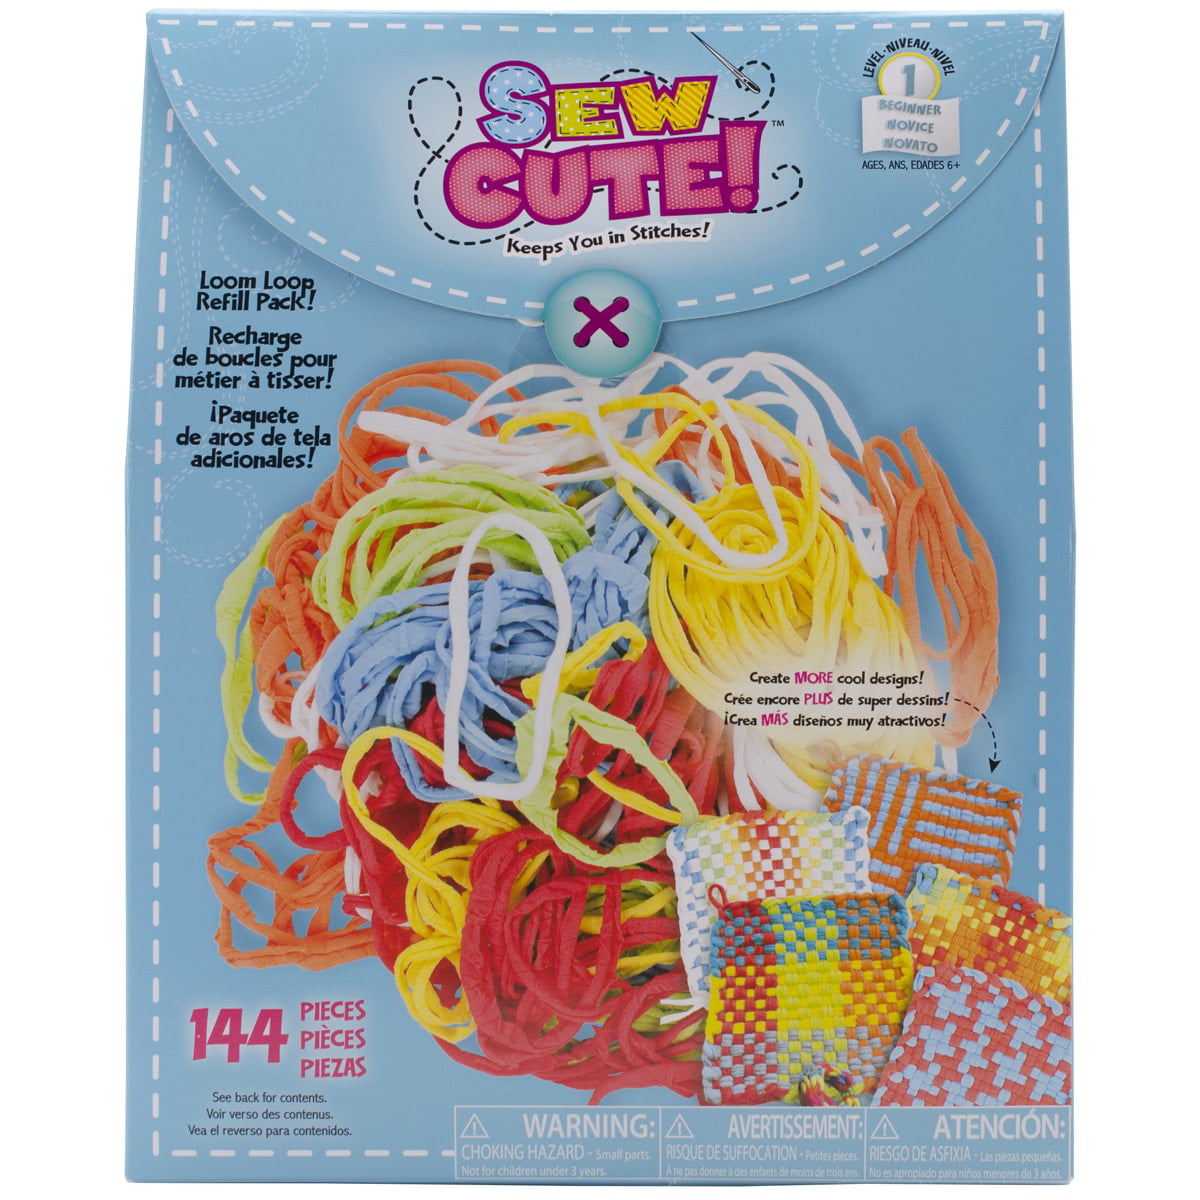 Multicoloured Acrylic 6.65 x 8.4 x 0.9 cm Colorbok Sew Cute Loom Loop Refill Kit Primary 